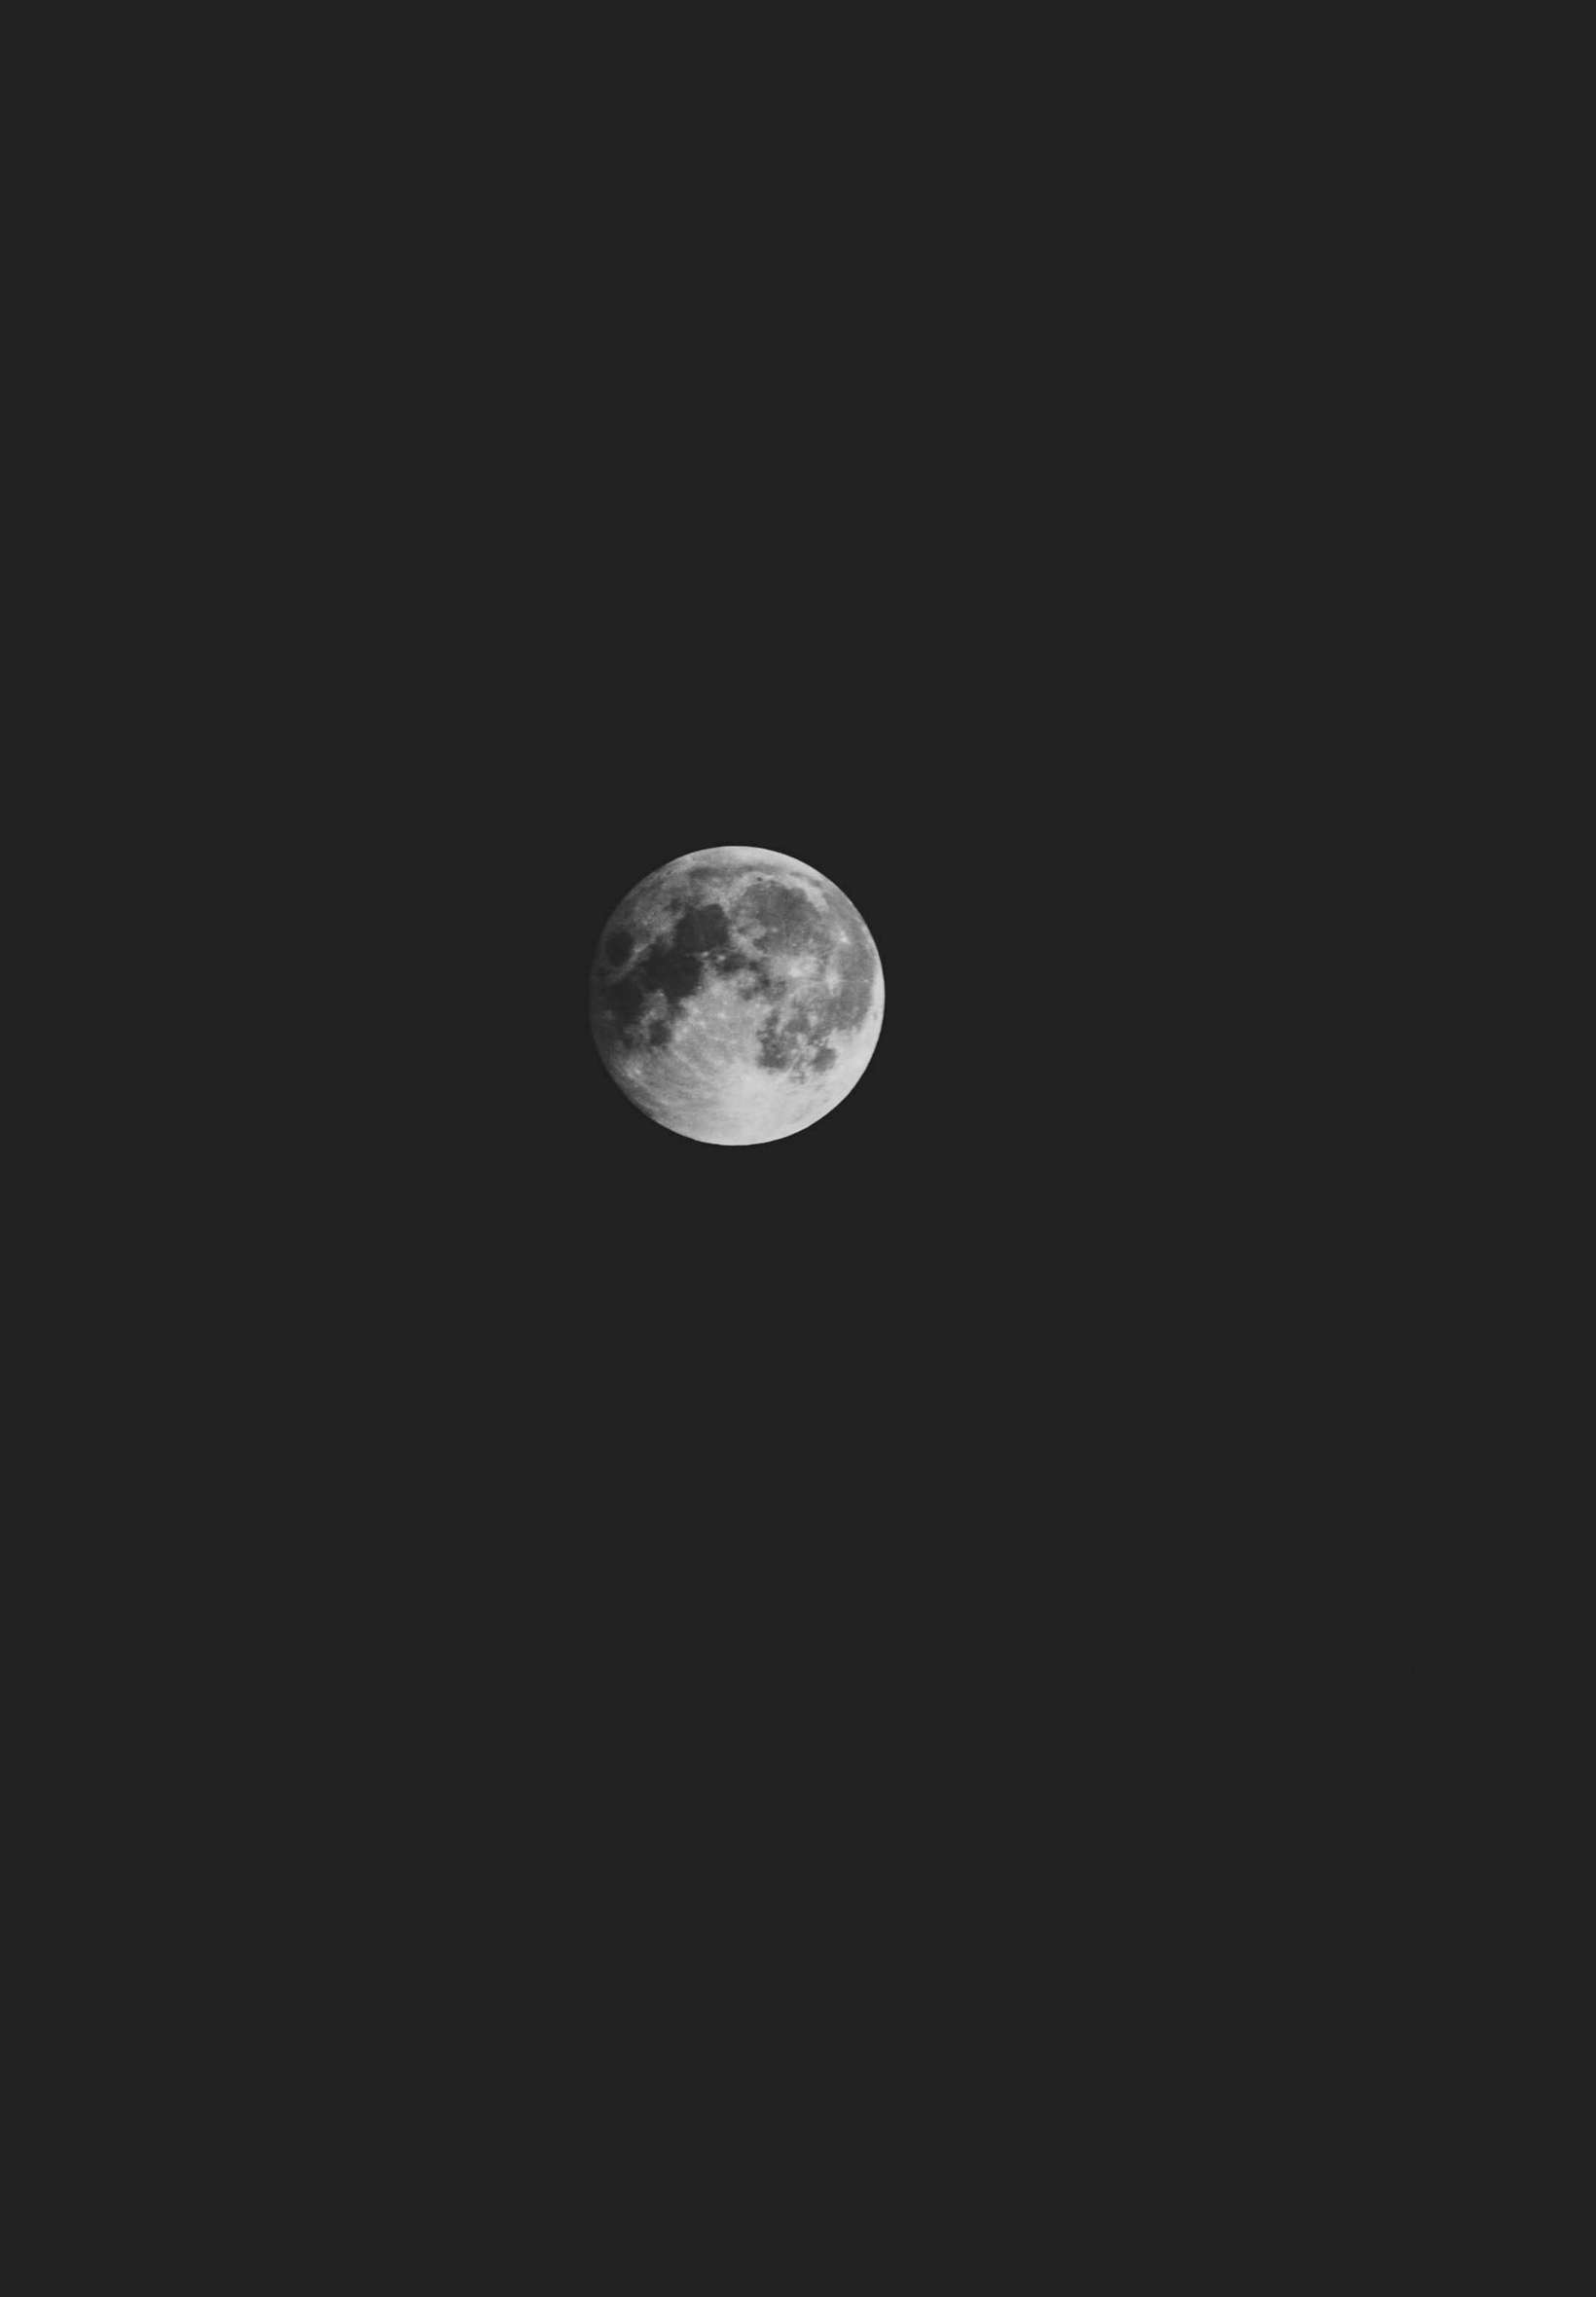 Download Enigmatic Half Moon Shining in the Dark Sky - 4K Ultra HD Wallpaper  for Phones Wallpaper | Wallpapers.com